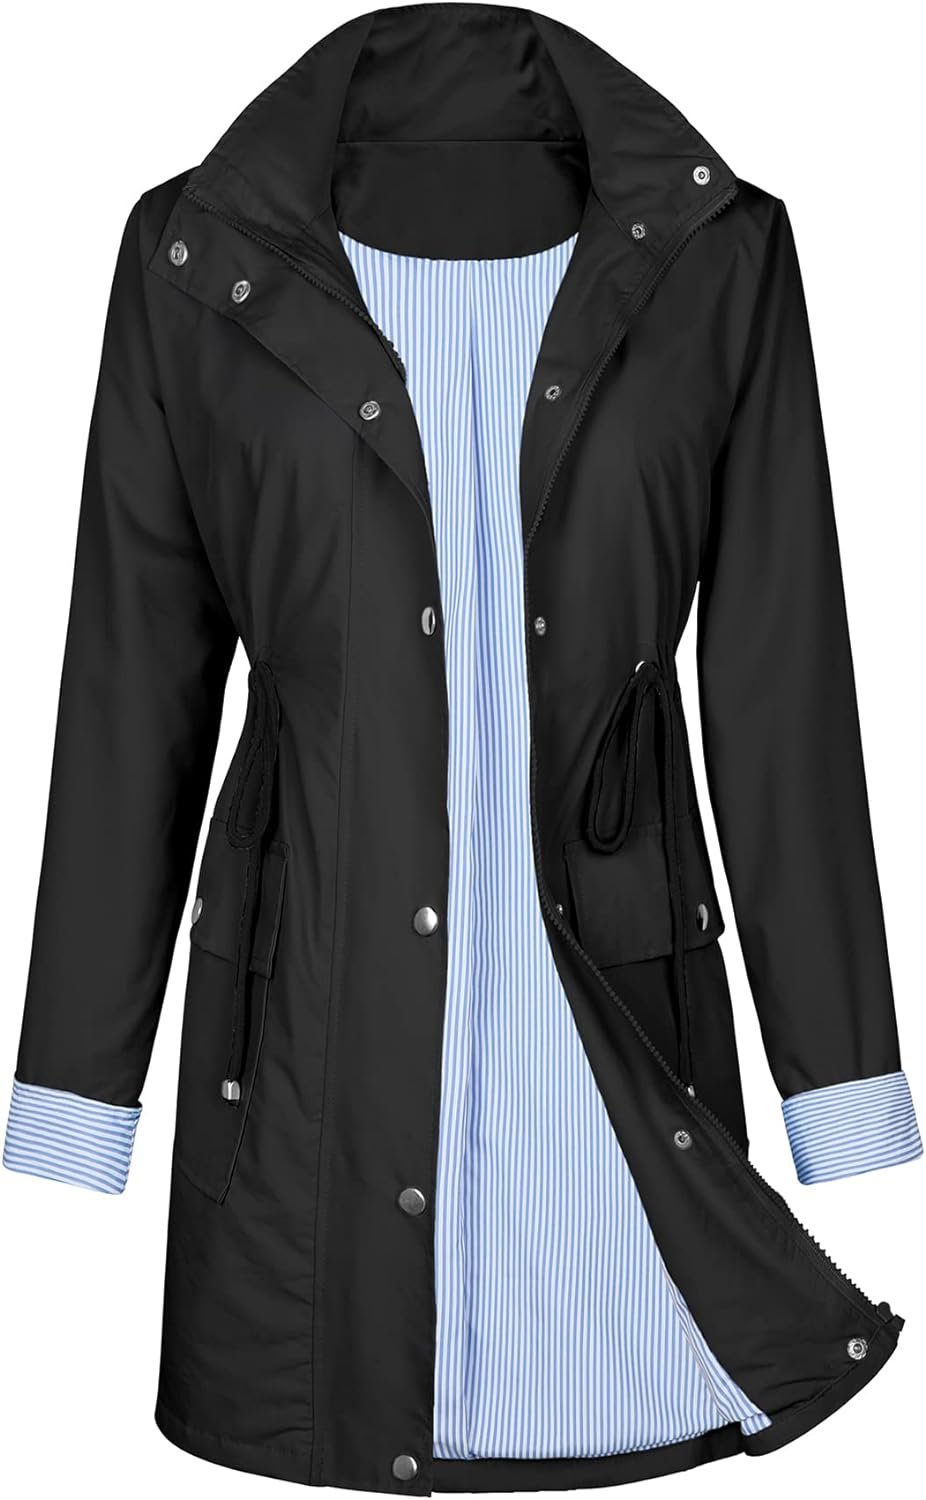 Zando Raincoat for Women Rain Jackets for Women Waterproof Lightweight Windbreaker Outdoor Hooded Trench Coat Long Rain Coats